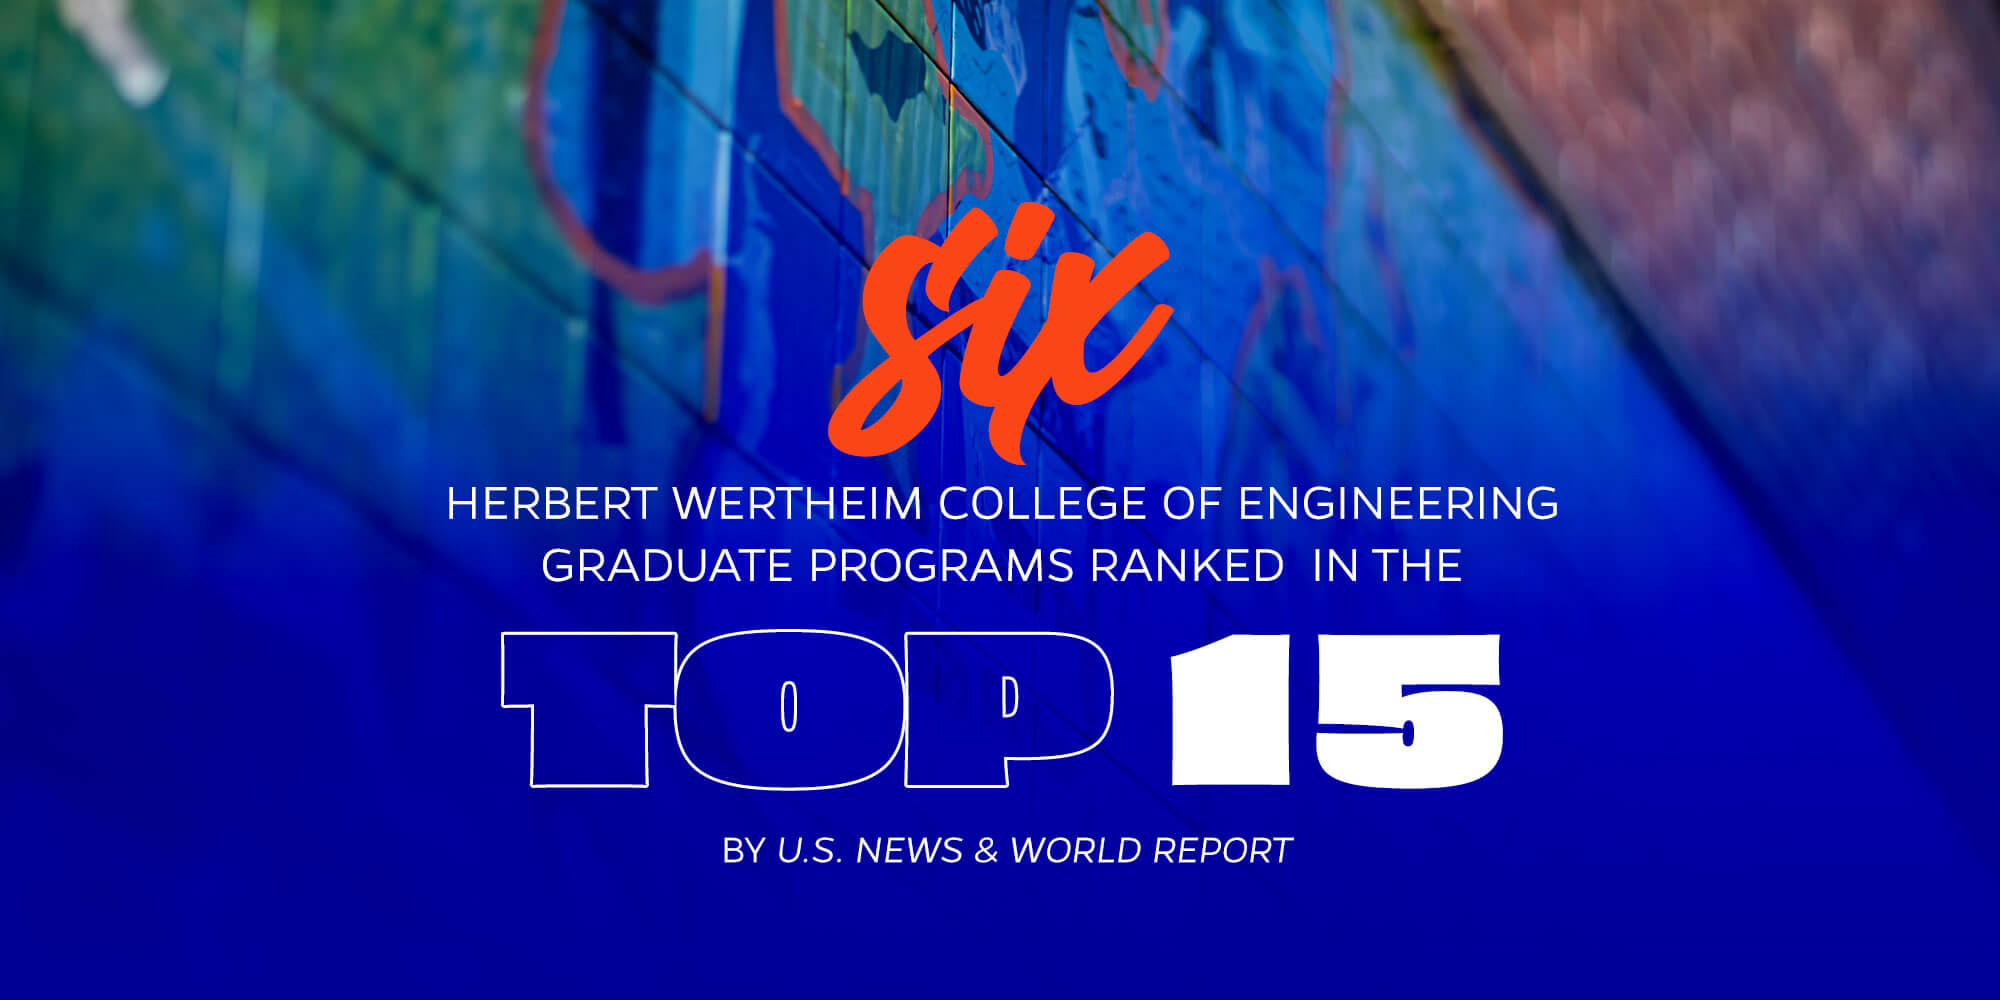 Six Herbert Wertheim College of Engineering graduate programs ranked in the top 15 by U.S. News & World Report